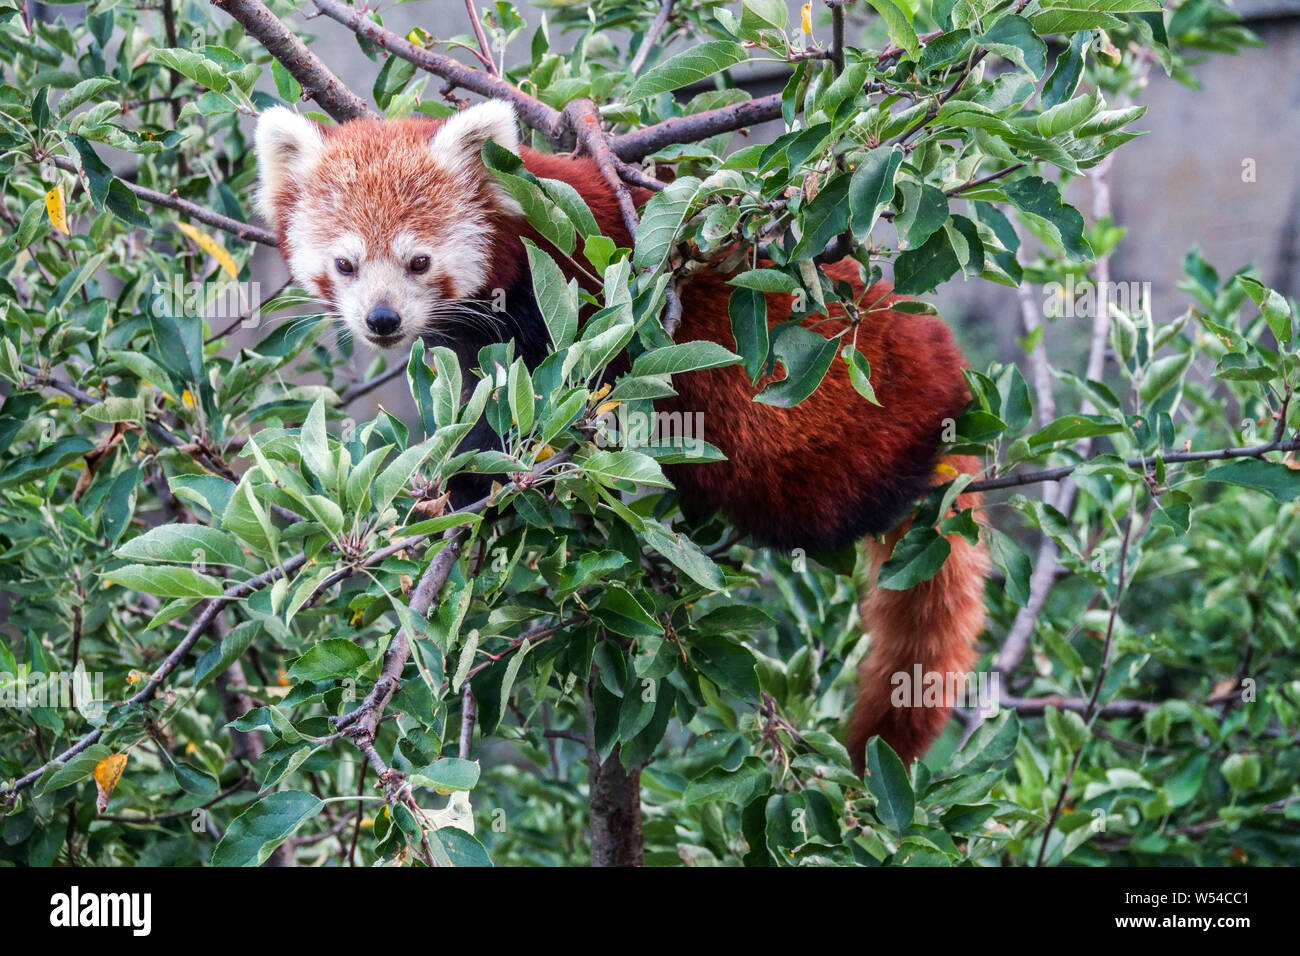 Red panda on tree branch, Prague Zoo Stock Photo - Alamy